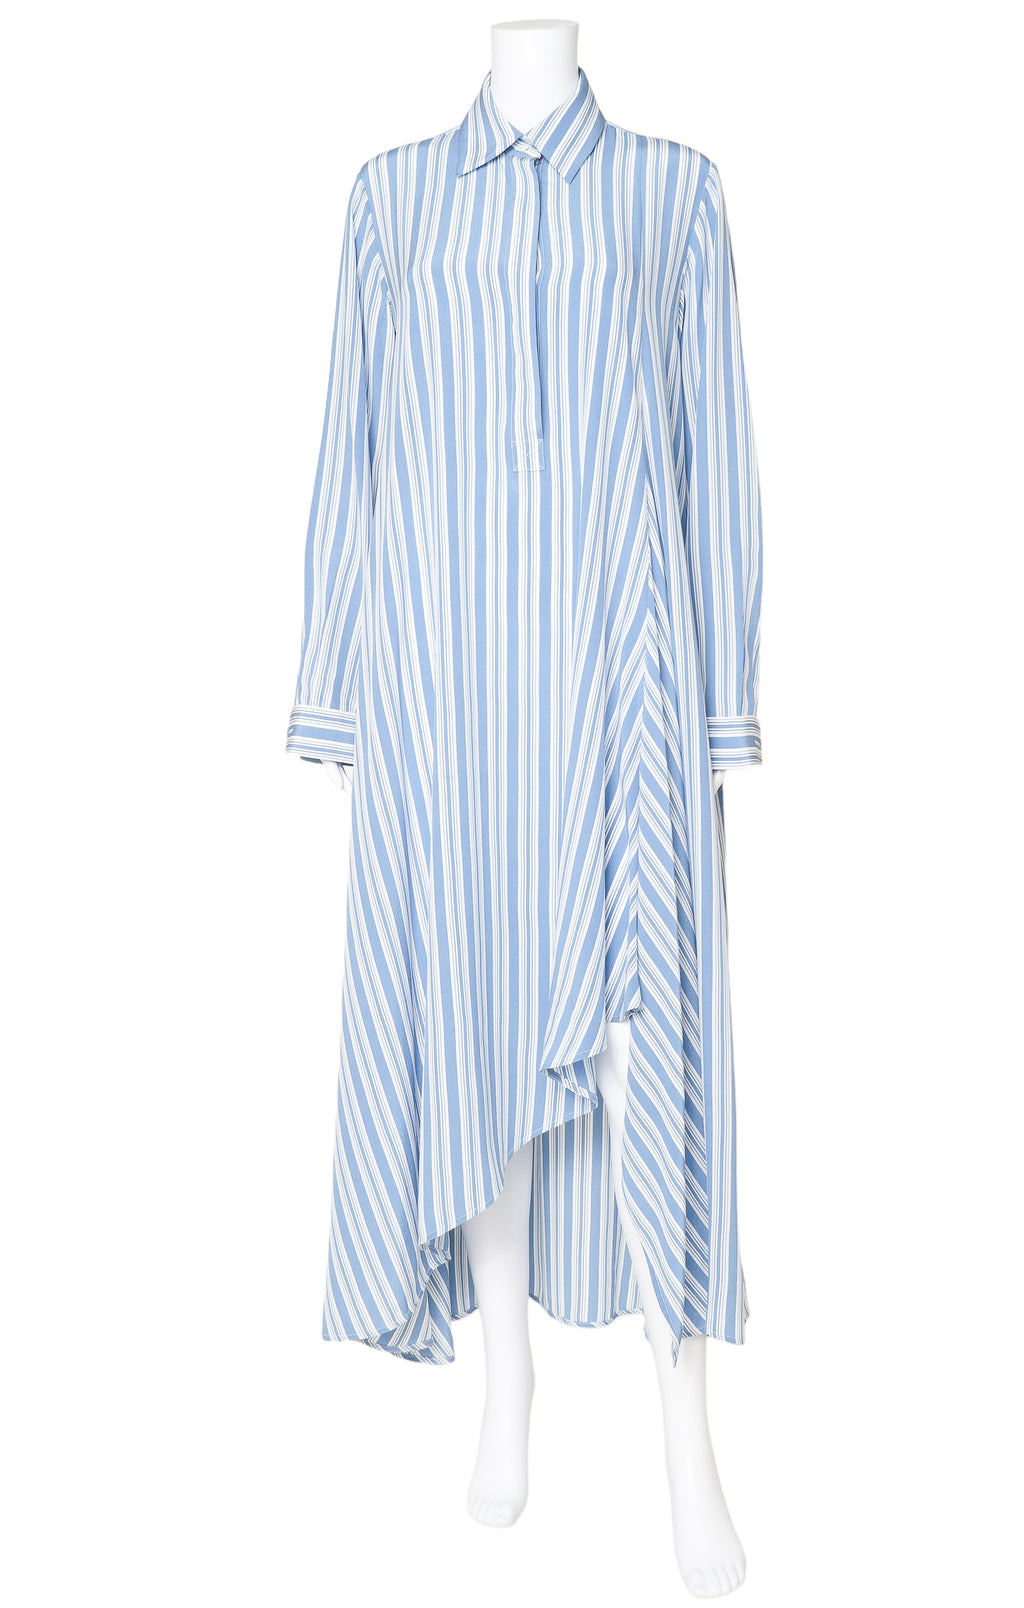 MICHAEL KORS COLLECTION Dress Size: S